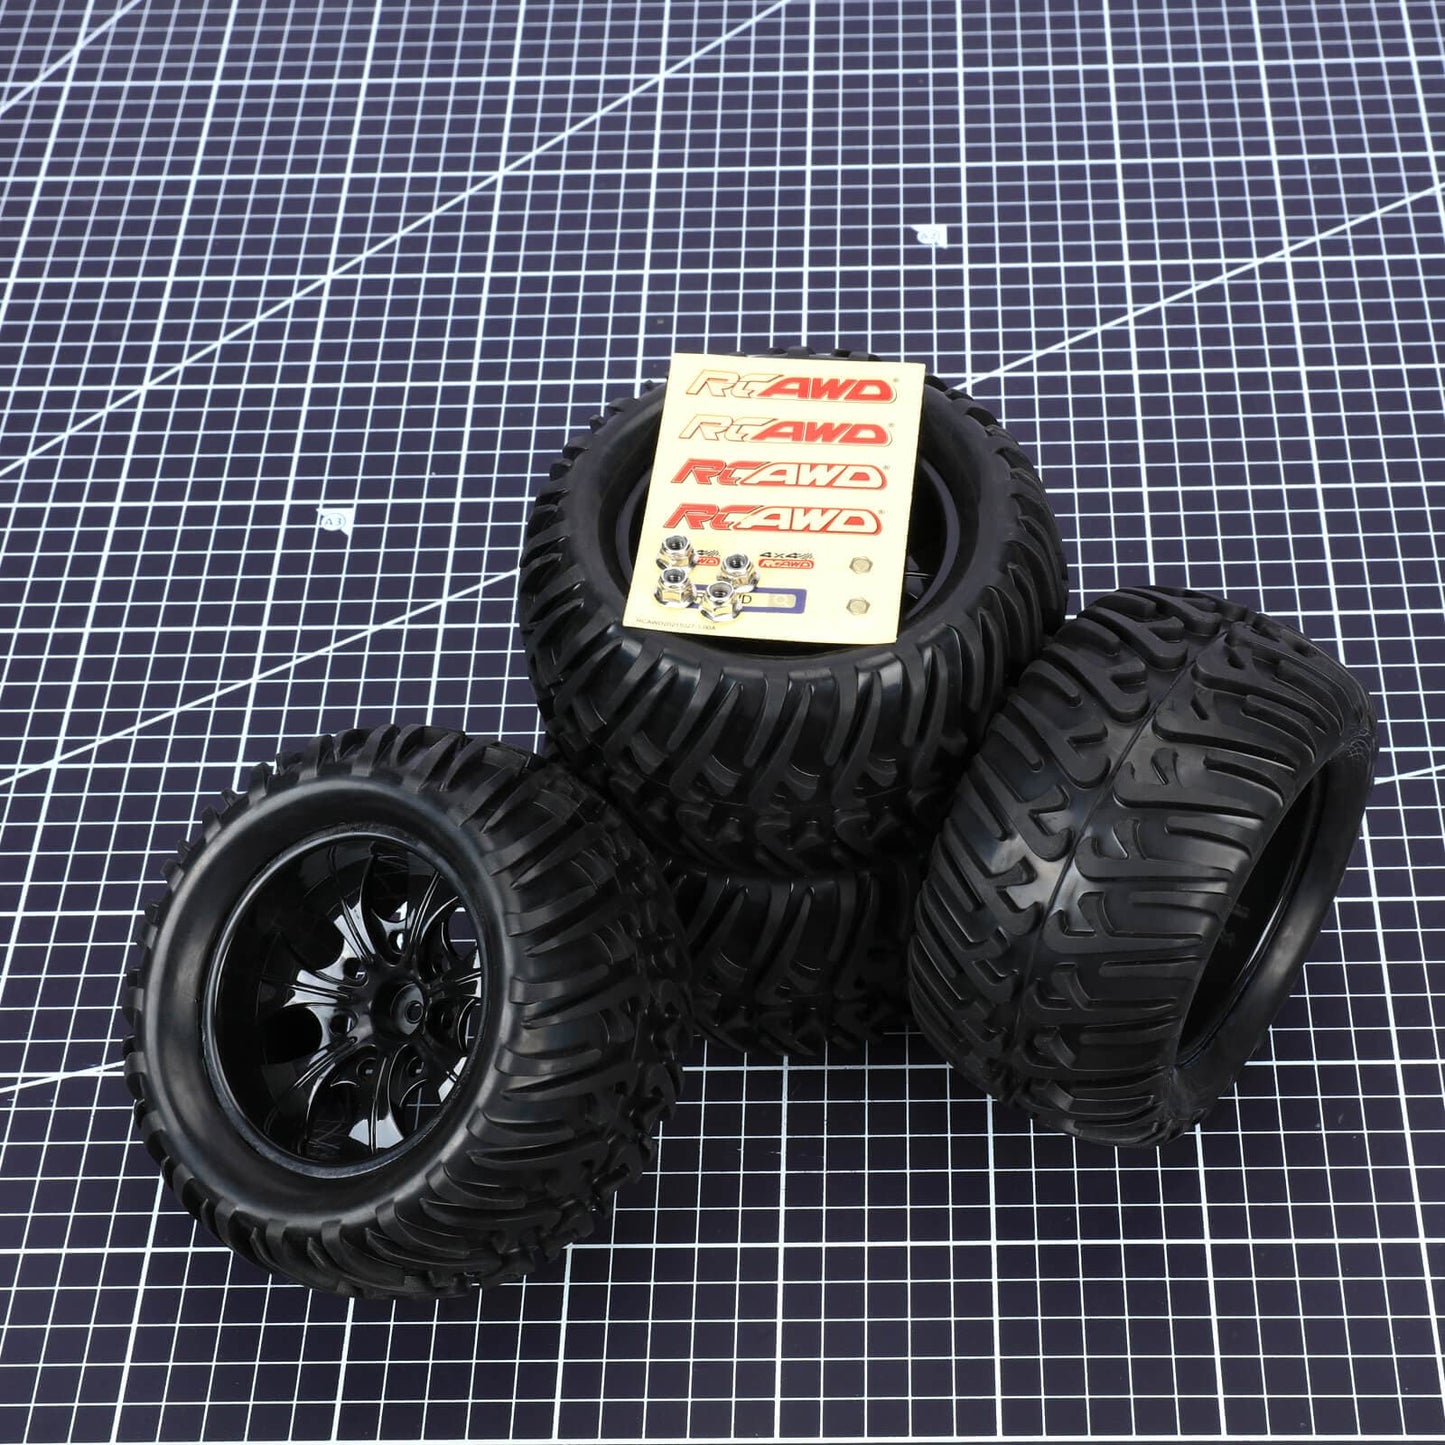 RCAWD Amazon RC Wheel & Tires 7 spokes LG-013BL 1/16 Pre-glued Monster Truck Wheel Tires LG-013BL LG-014BL